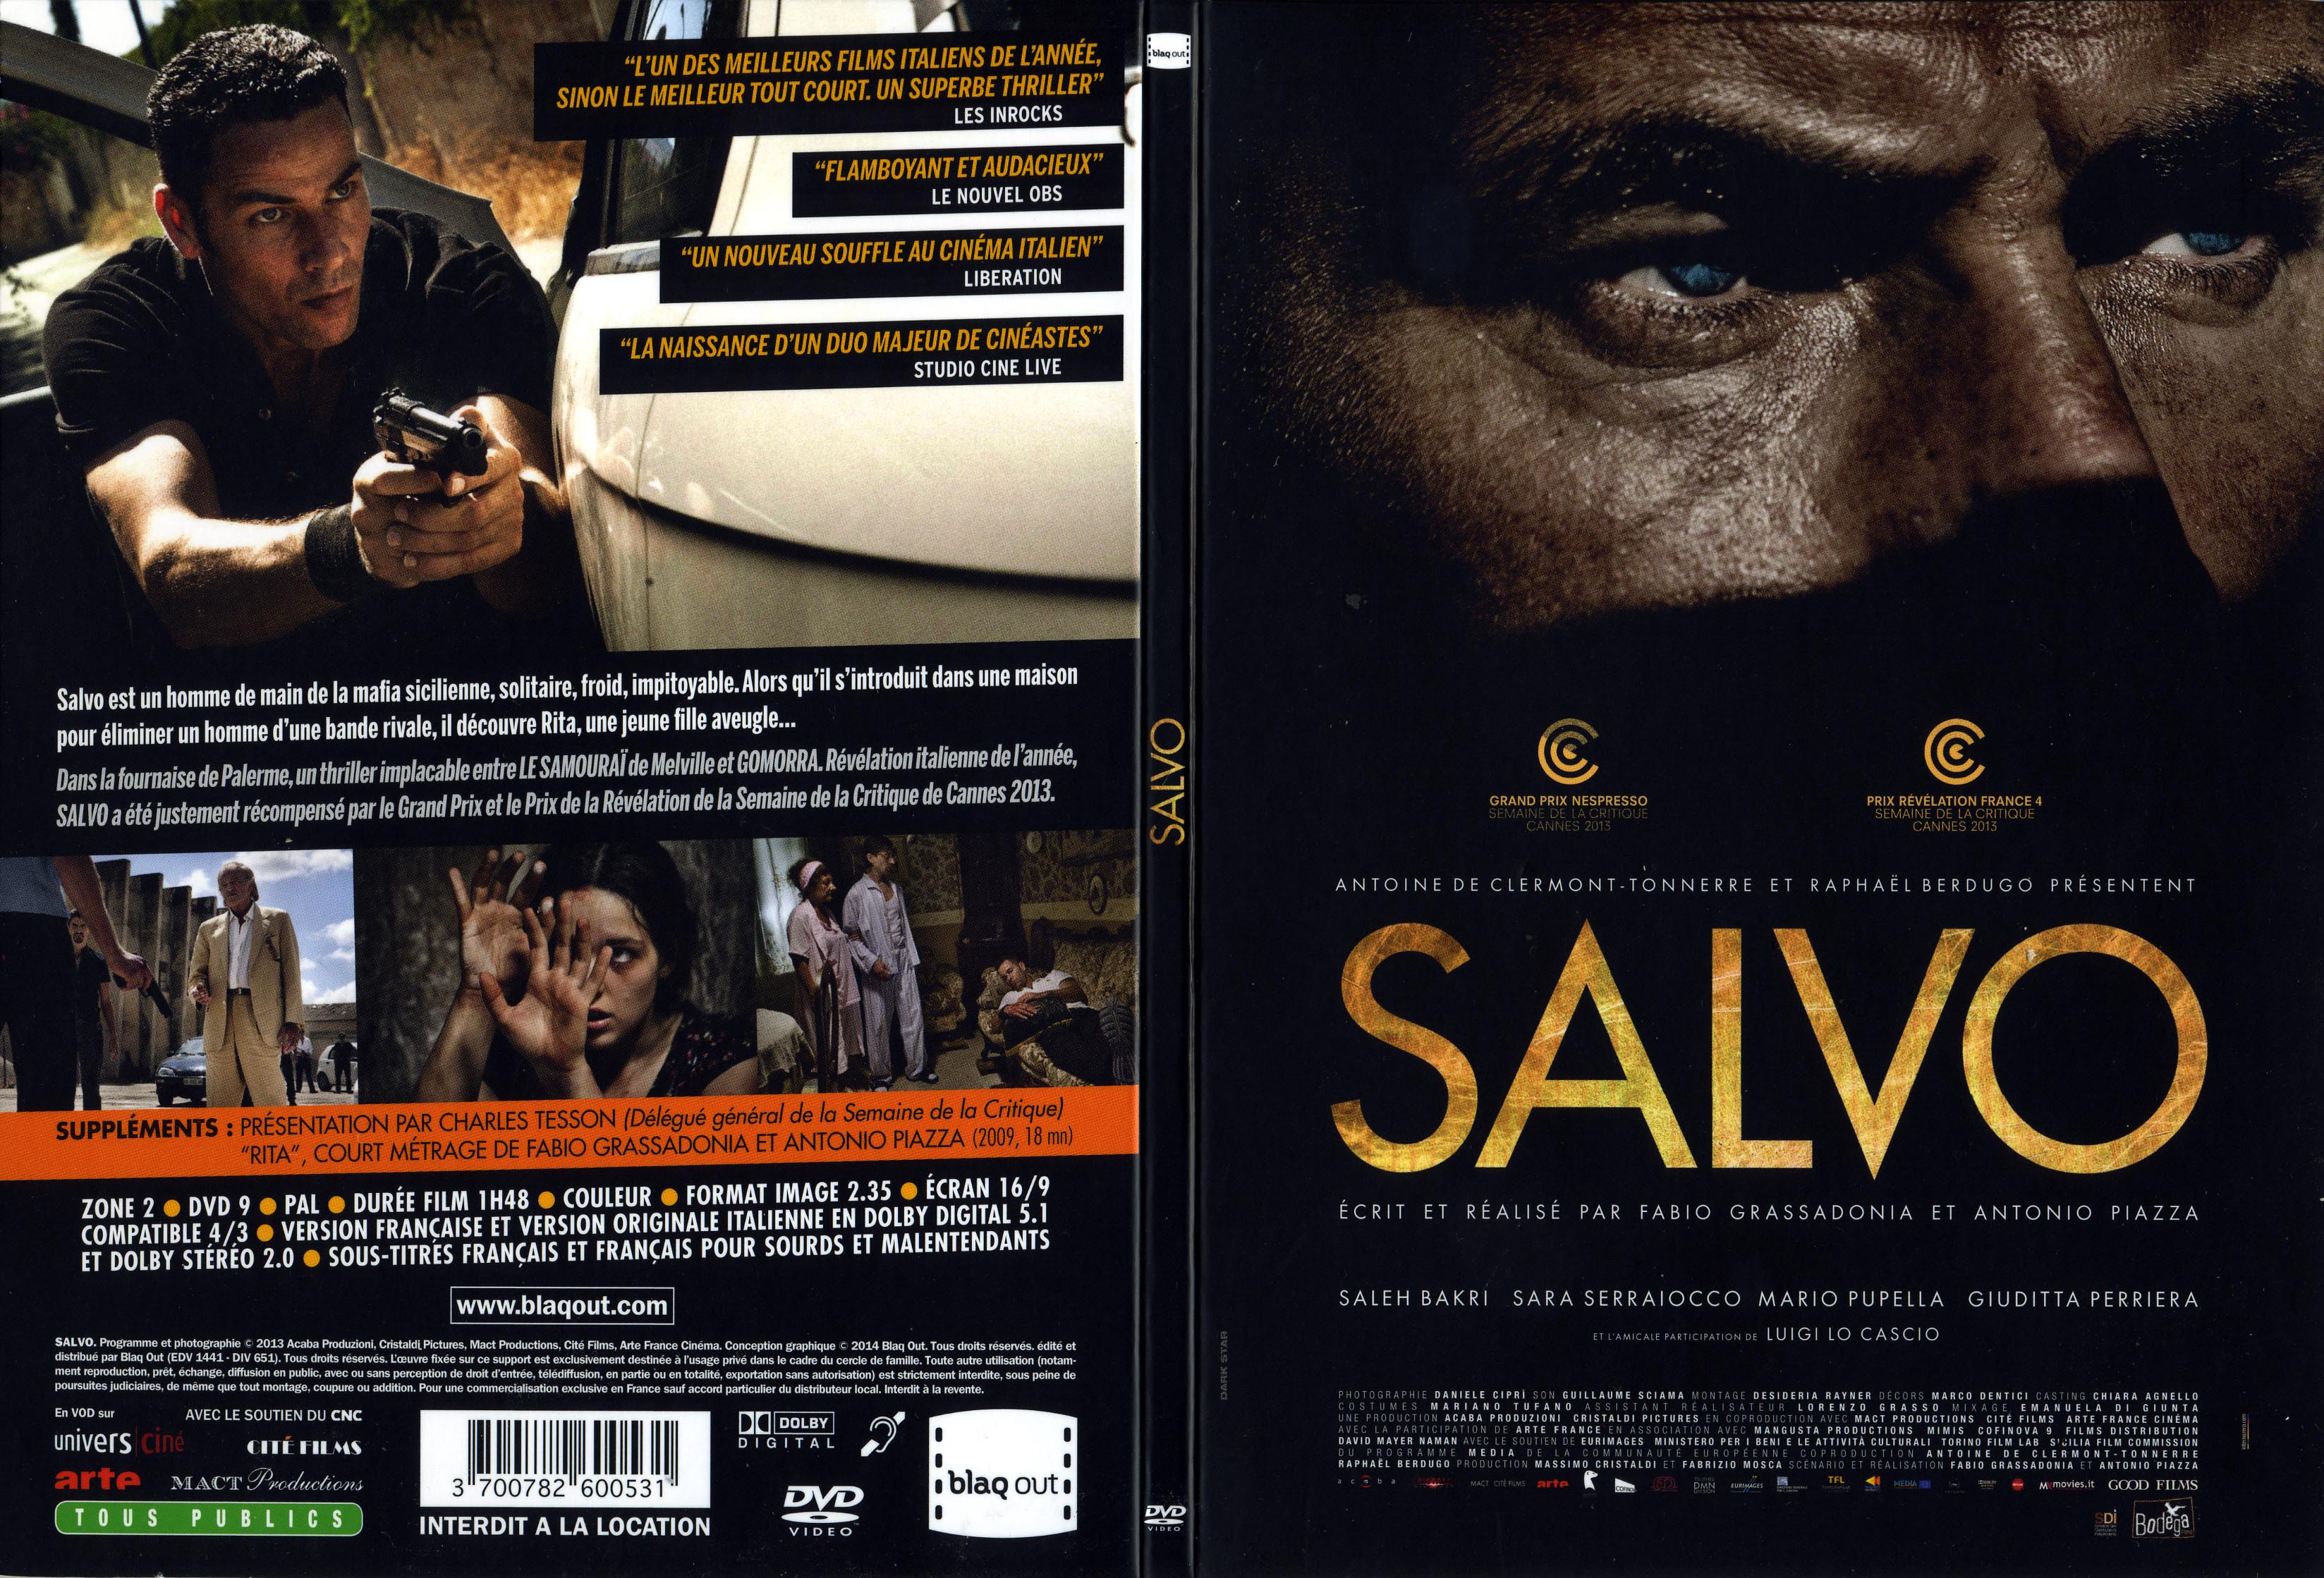 Jaquette DVD Salvo